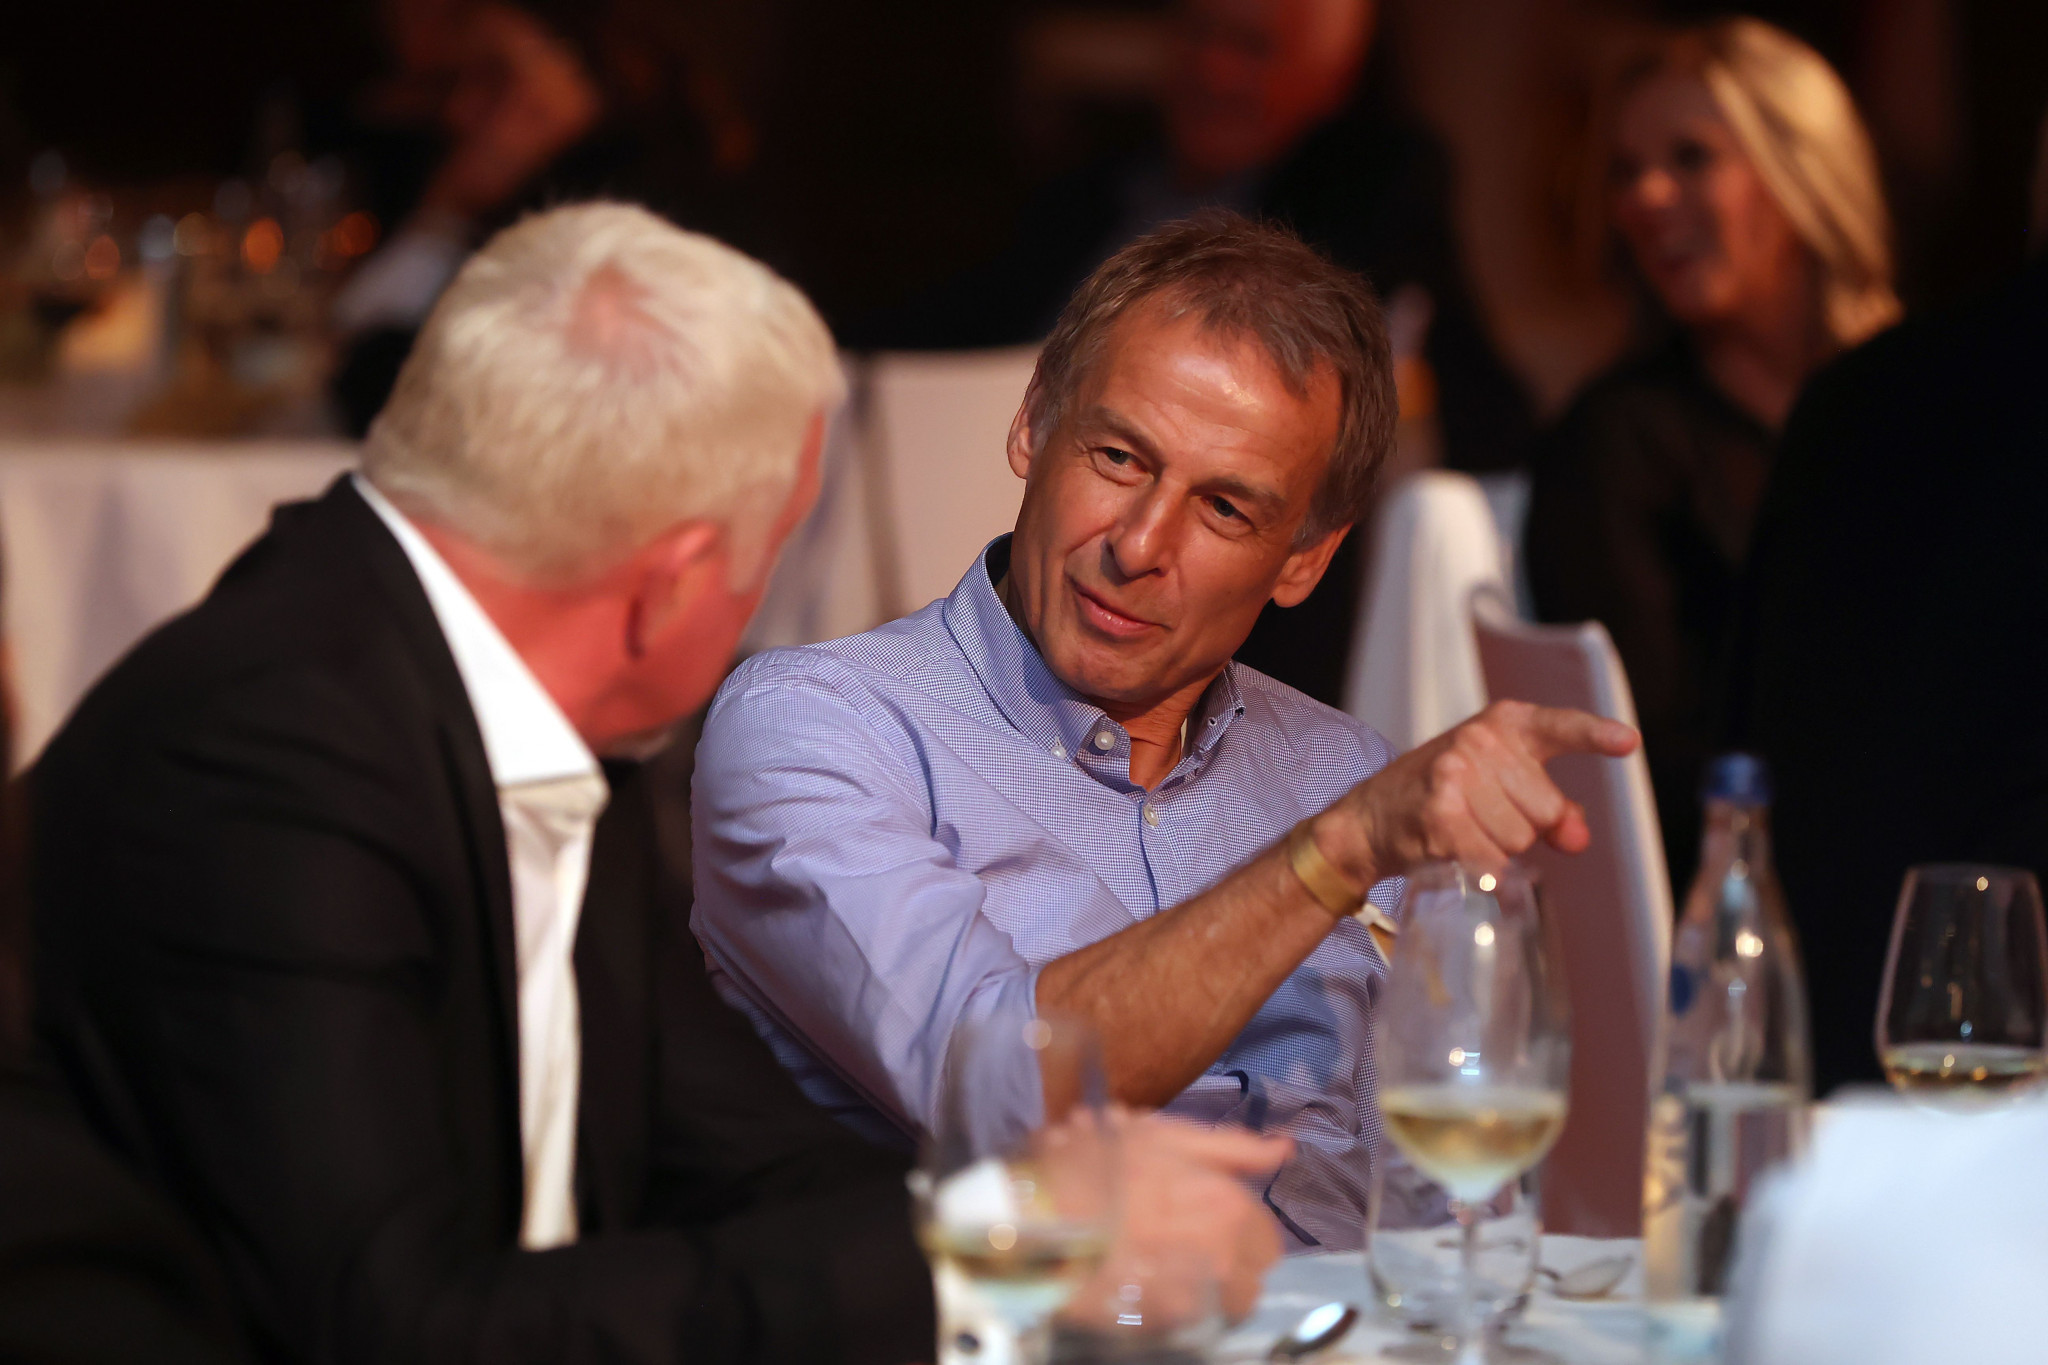 Iran FA, Queiroz demand FIFA sacks Klinsmann over "outrageous" punditry comments